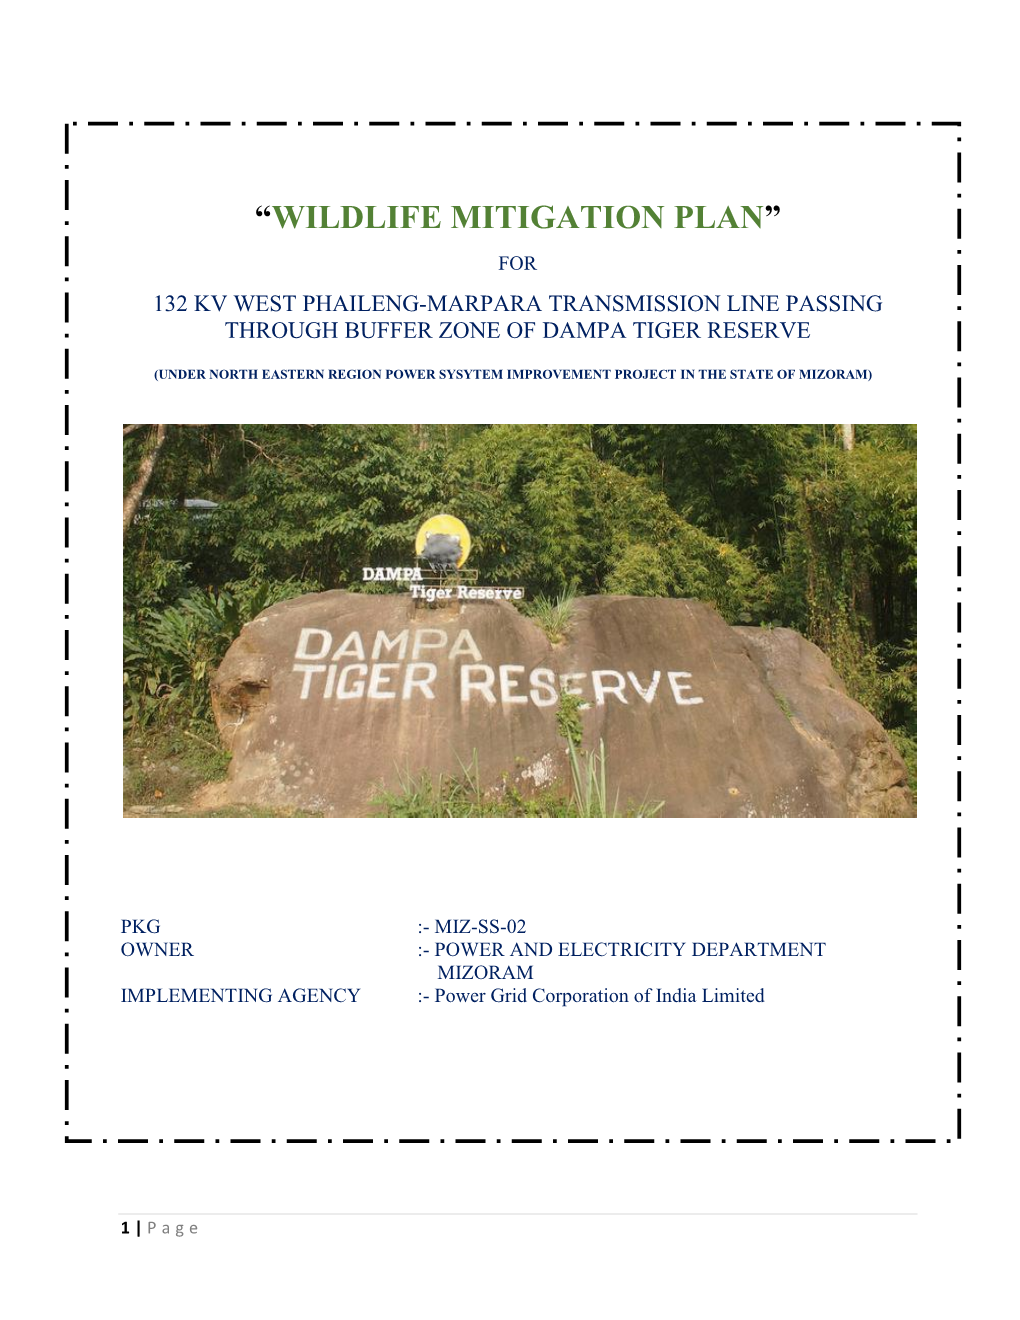 “Wildlife Mitigation Plan” for 132 Kv West Phaileng-Marpara Transmission Line Passing Through Buffer Zone of Dampa Tiger Reserve